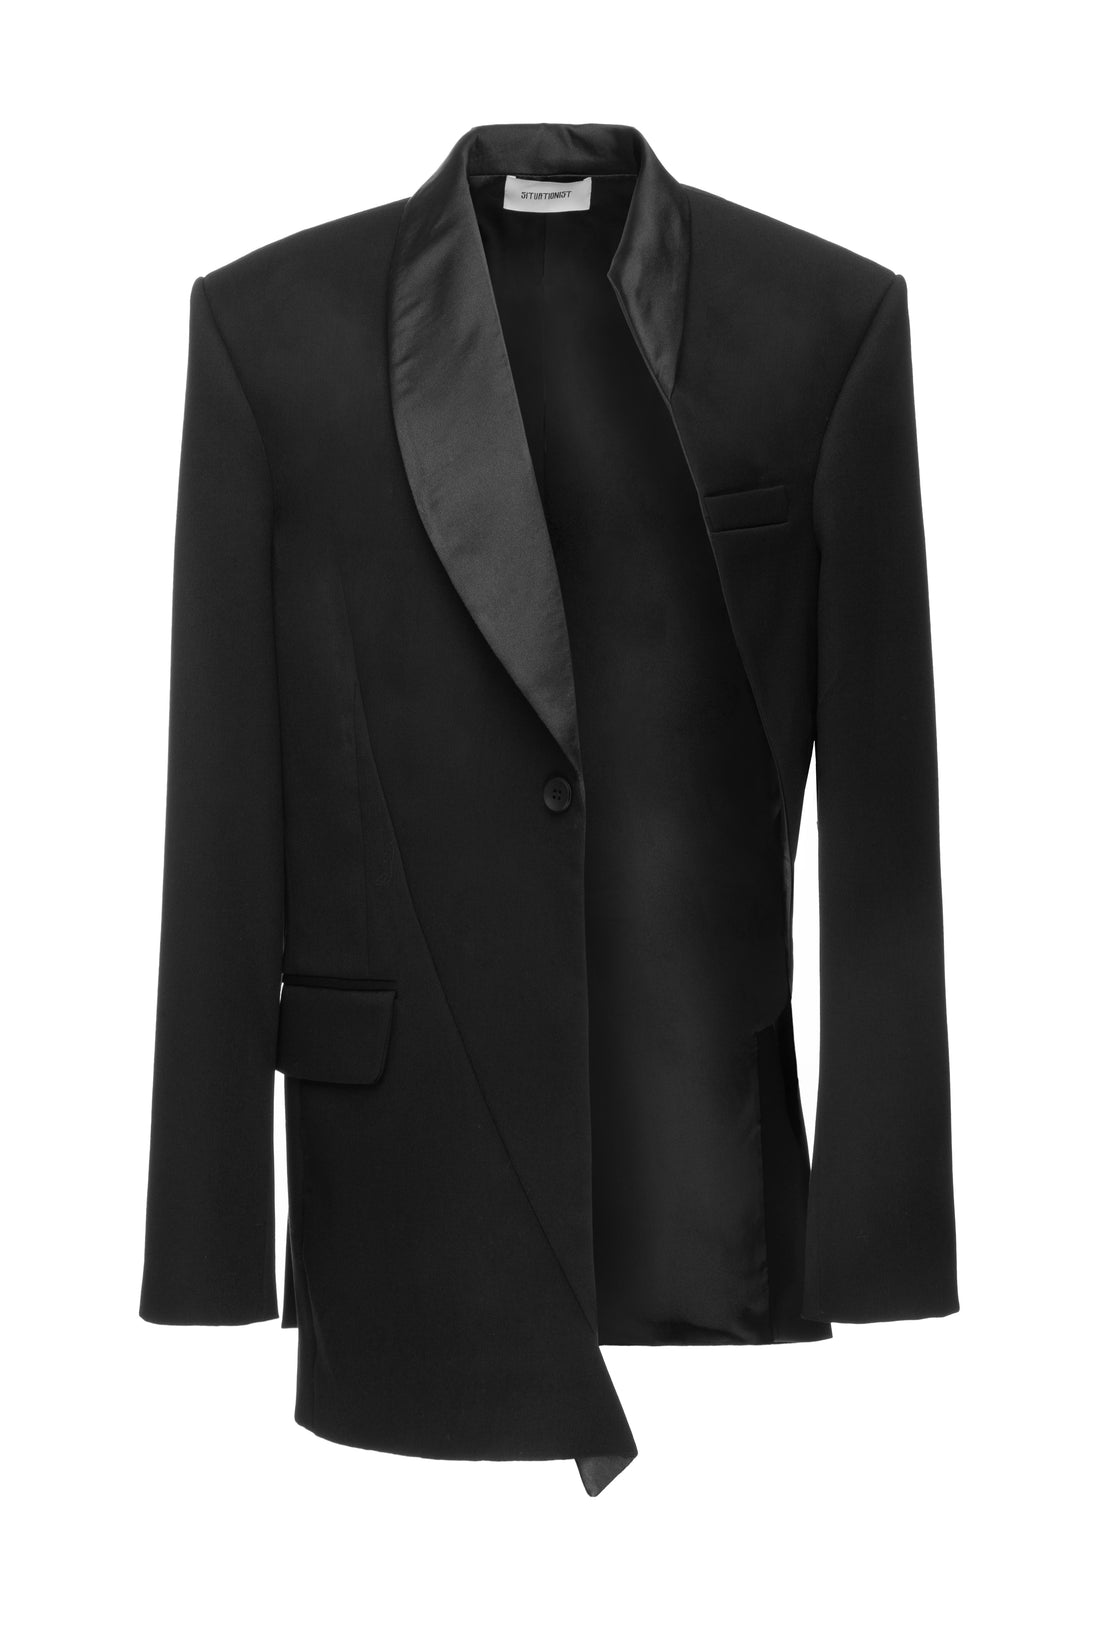 SITUATIONIST Black Asymmetrical Jacket